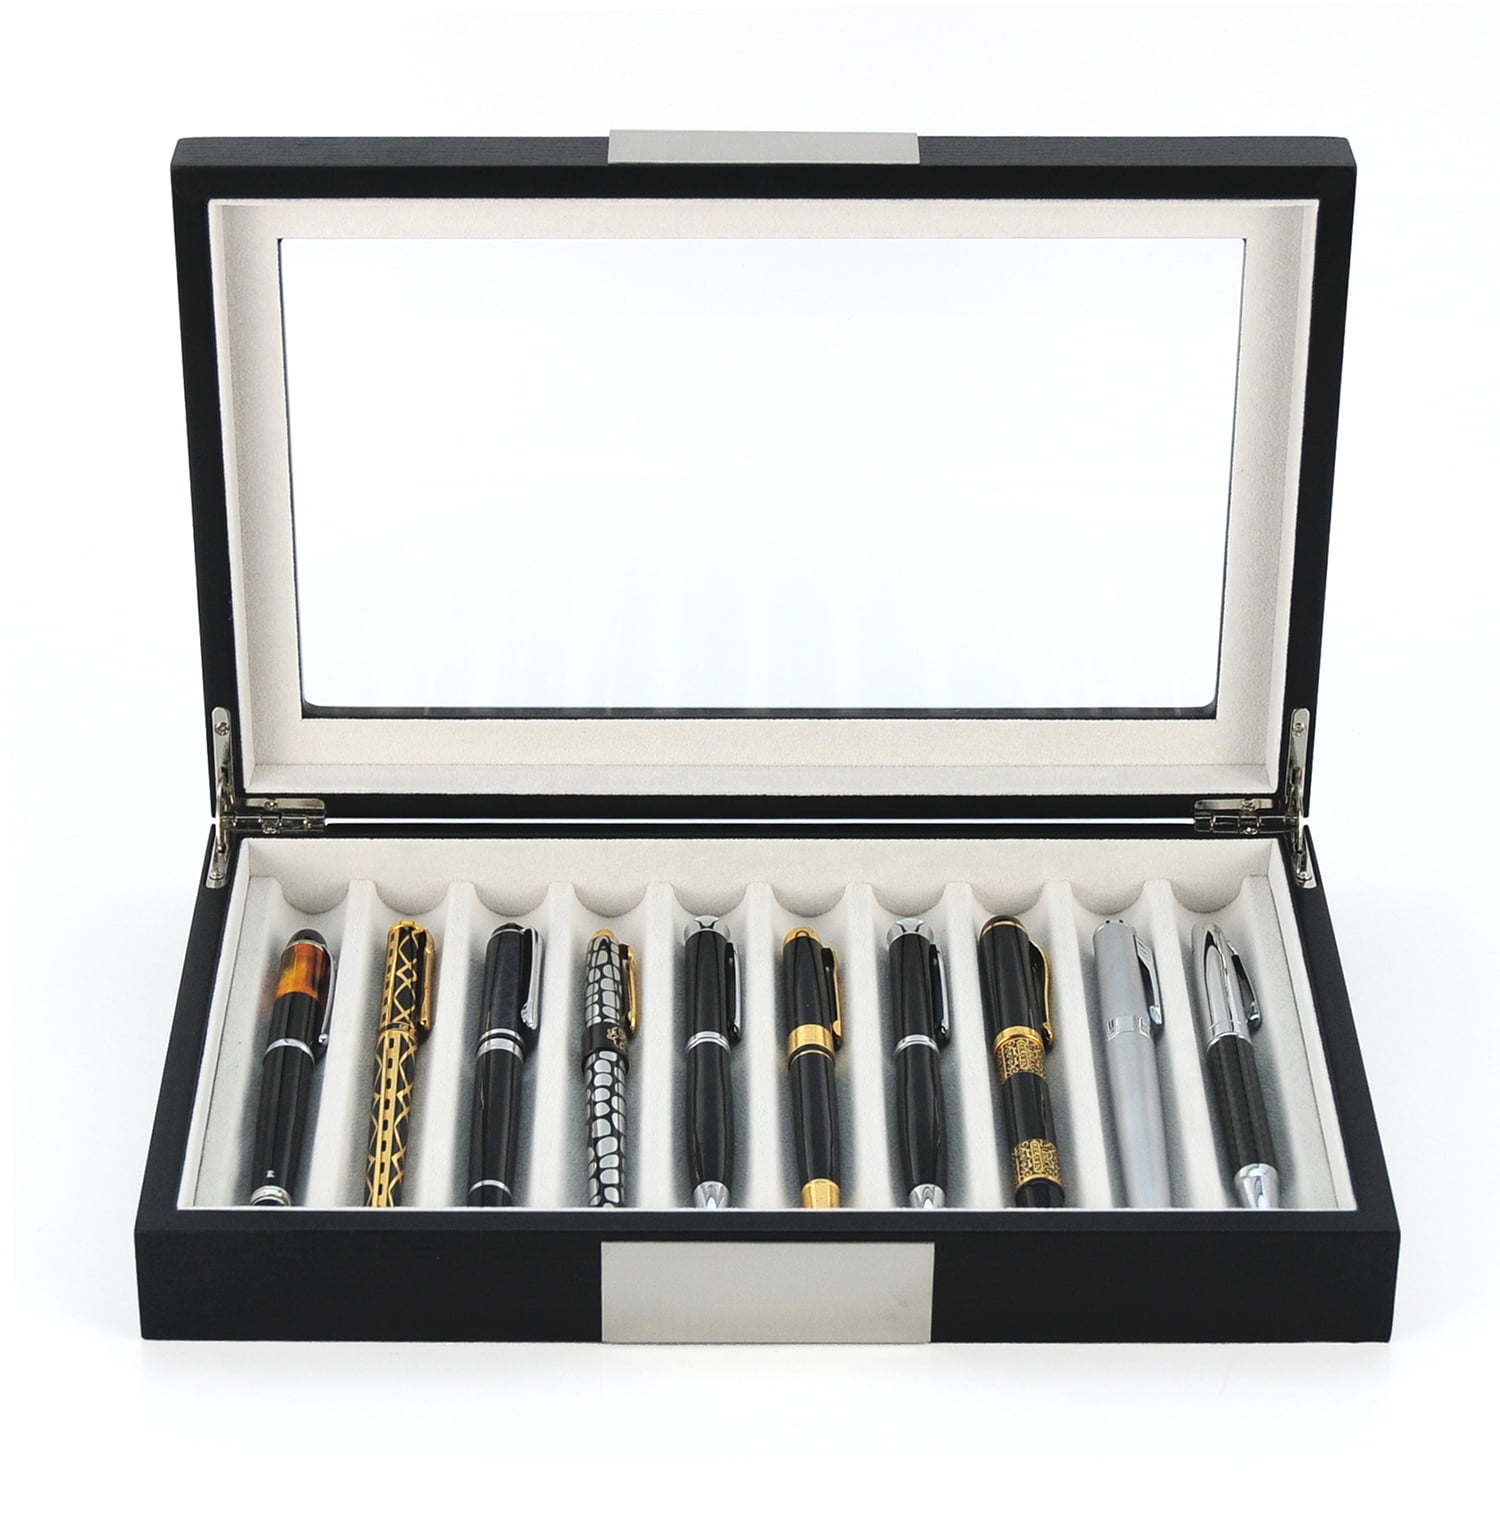 Lifomenz Co Wood Pen Display Box 10 Pen Organizer Box,Glass Pen Display Case Storage Box with Lid,Top Glass Window Pen Collection Display Case LMPB 10 EB 